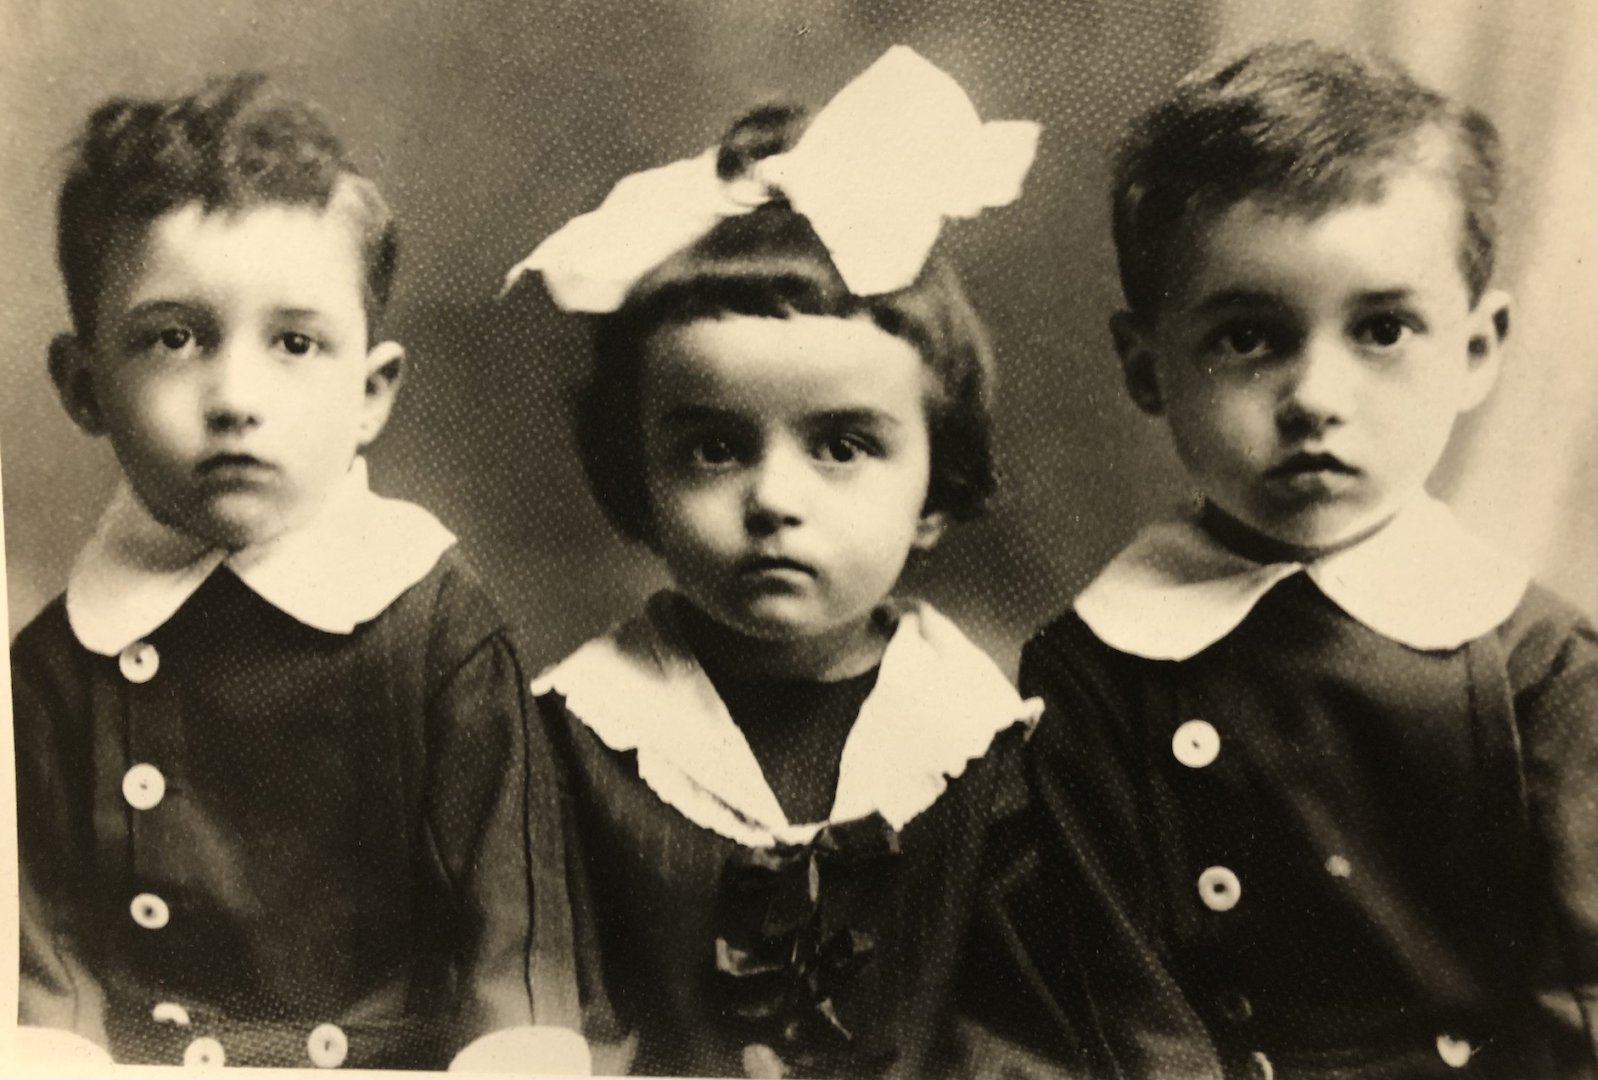 The children of the family Pogány circa 1918